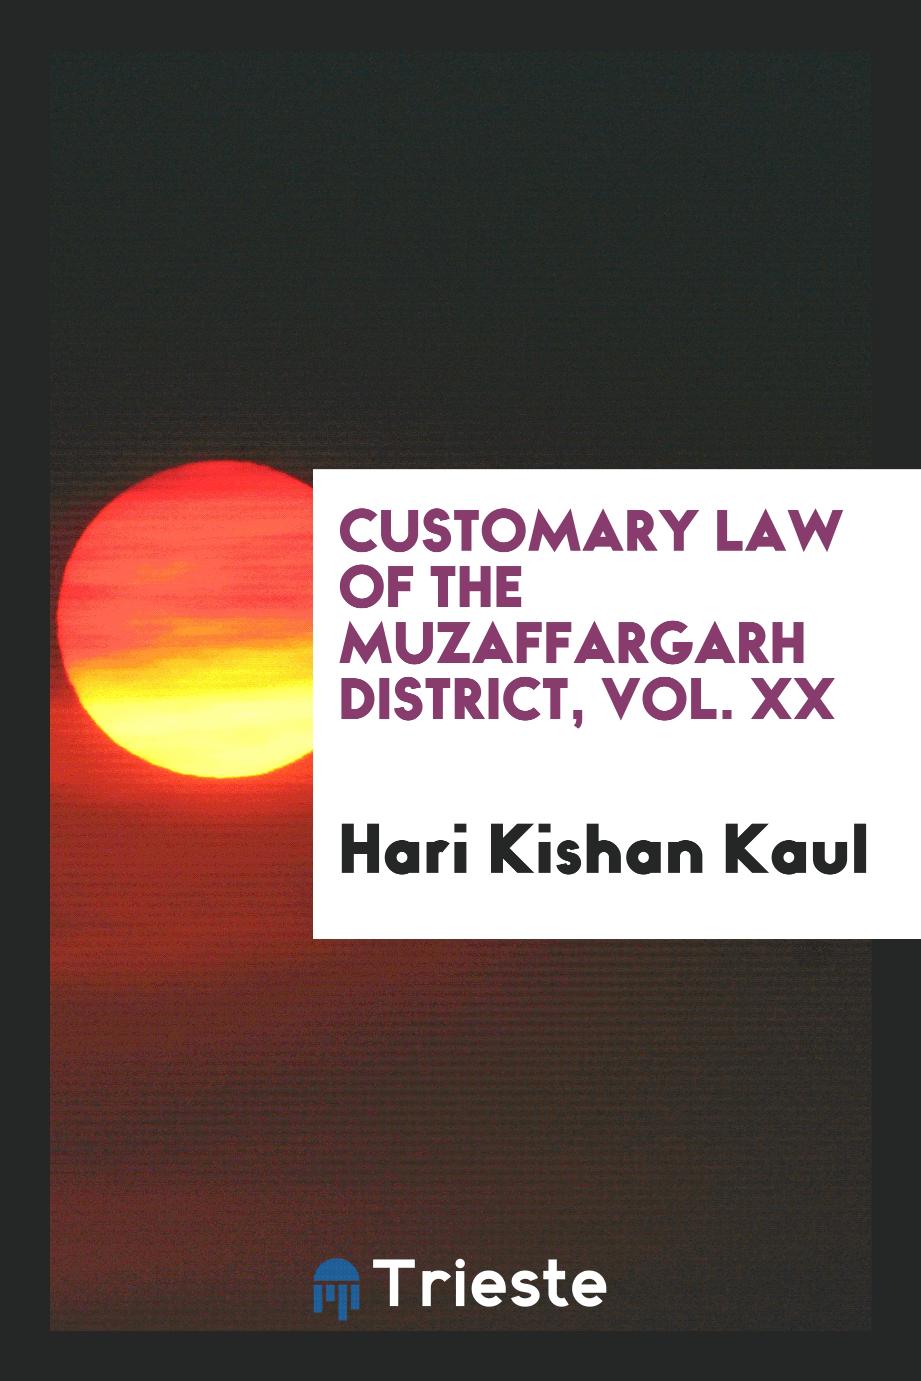 Customary law of the Muzaffargarh district, Vol. XX